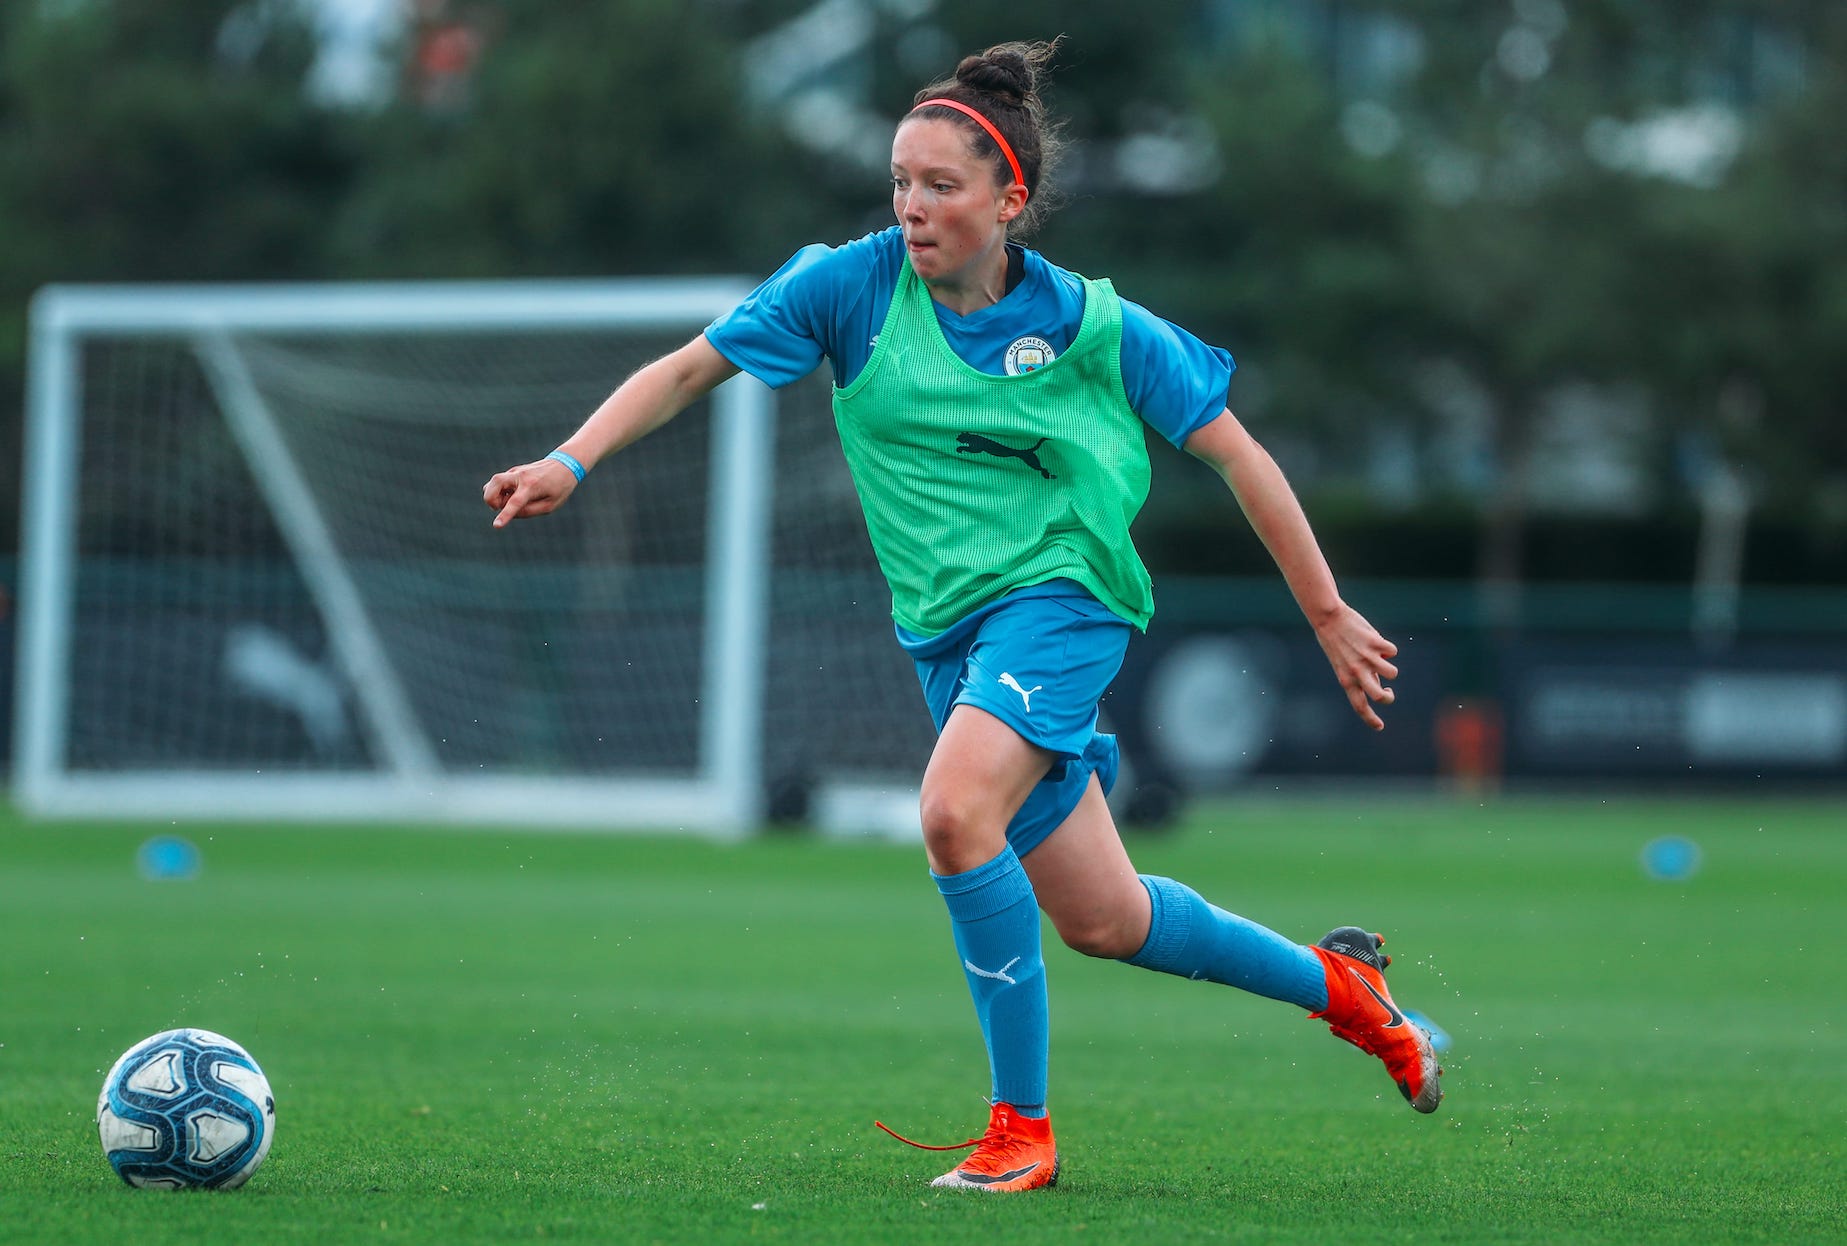 A female footballer running towards a ball. She is wearing a blue, Manchester City Football School kit and a green bib.